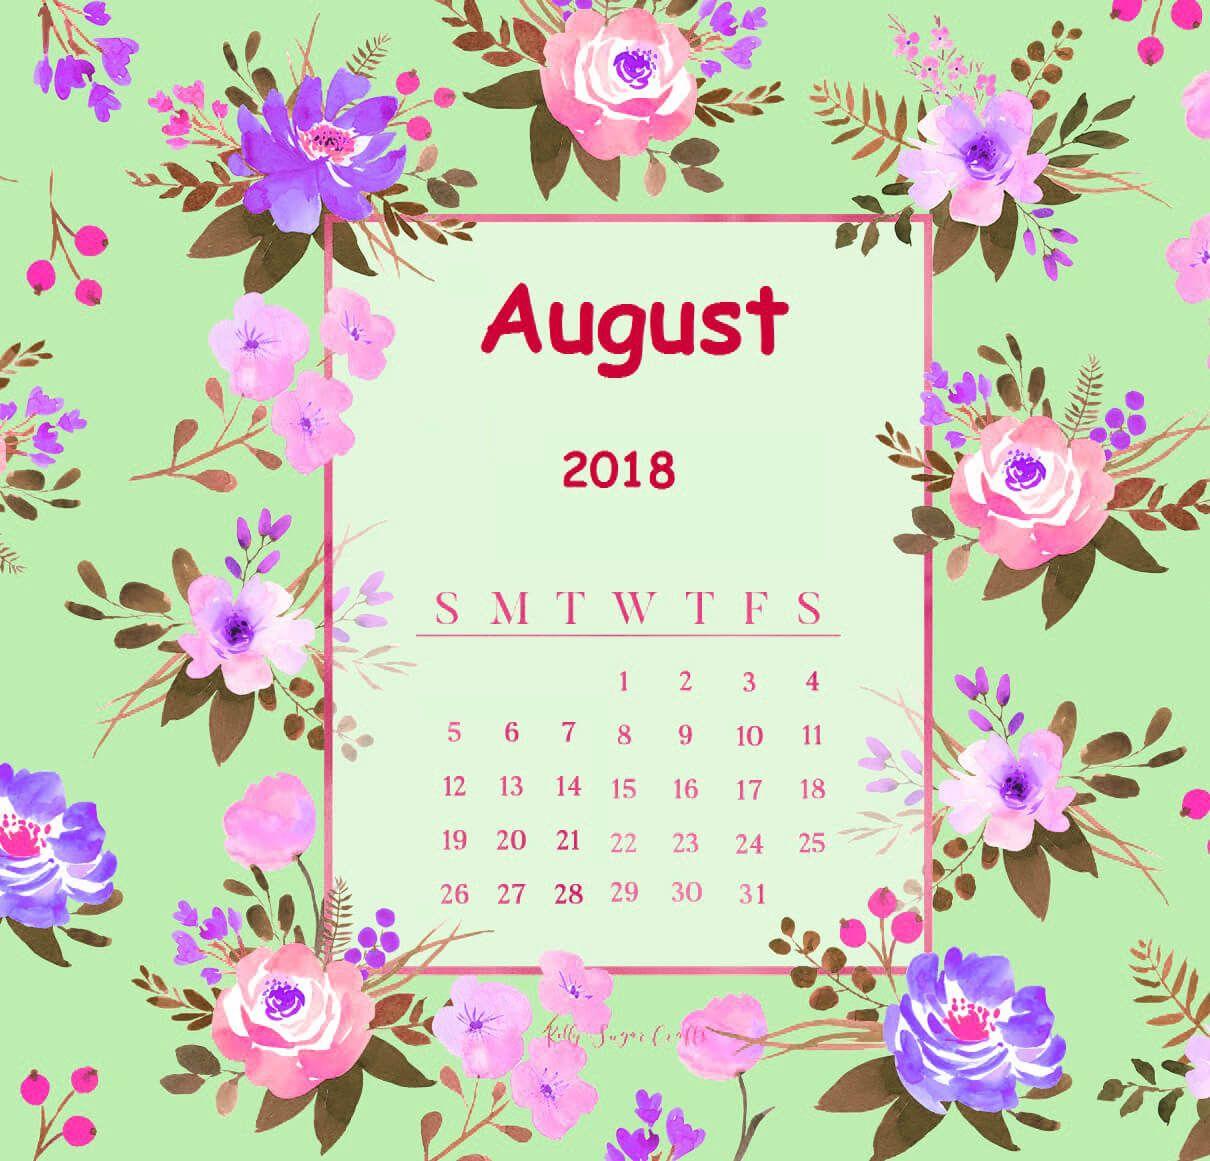 Cute August 2018 Calendar Wallpaper. Daily Calendar 2018 Printable